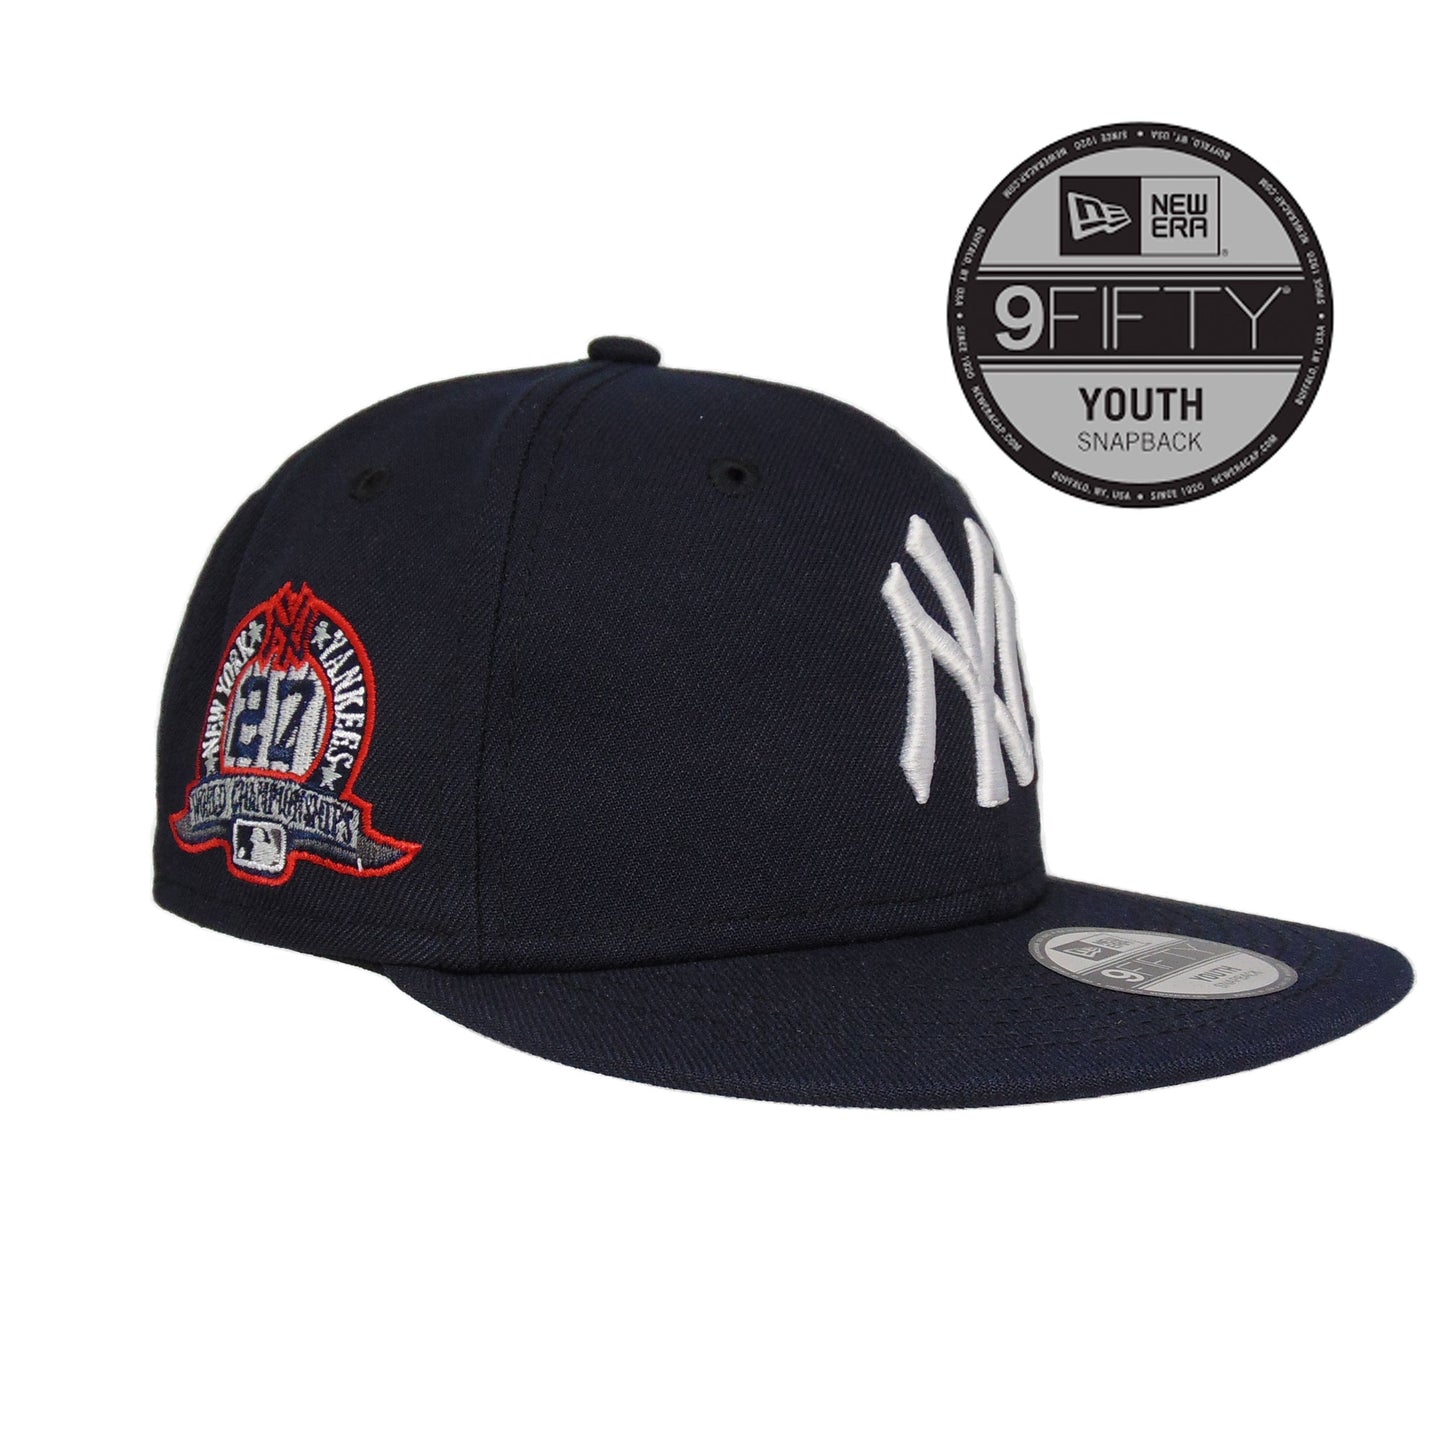 New York Yankees Custom New Era 9FIFTY YOUTH Snap back Cap Navy Rose